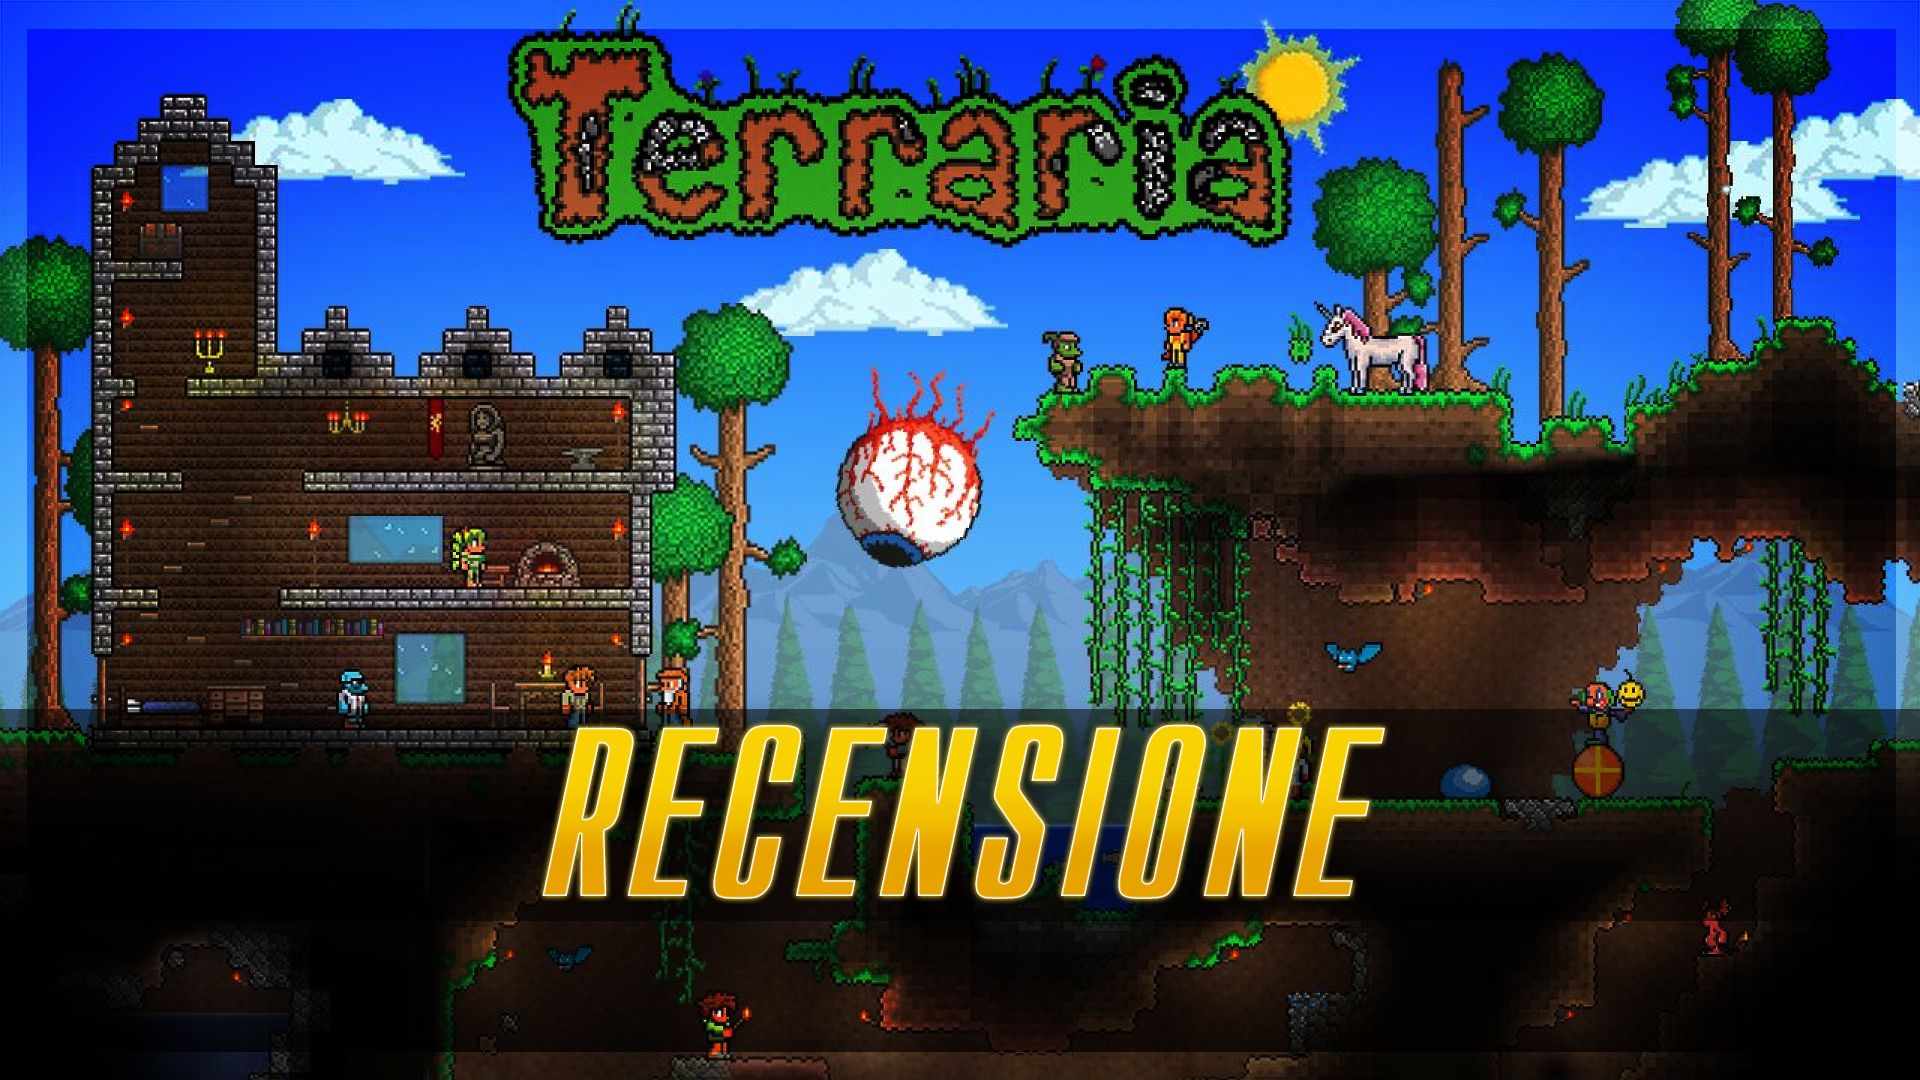 terraria on switch price